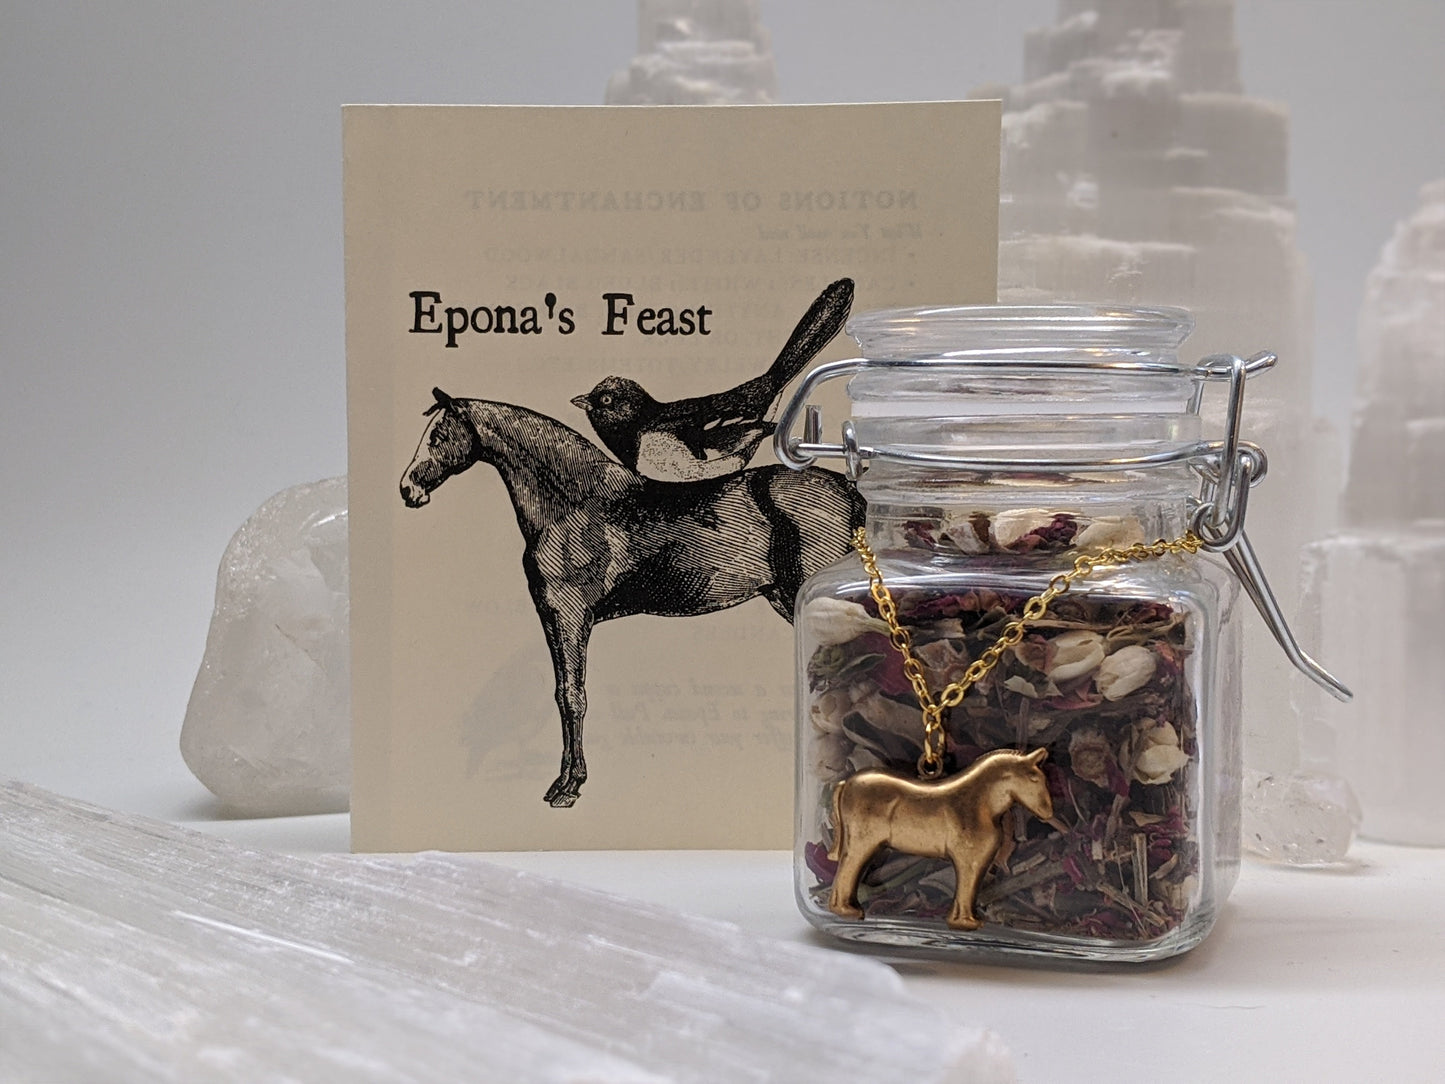 Epona's Feast Herbal Tea - Original City Apothecary